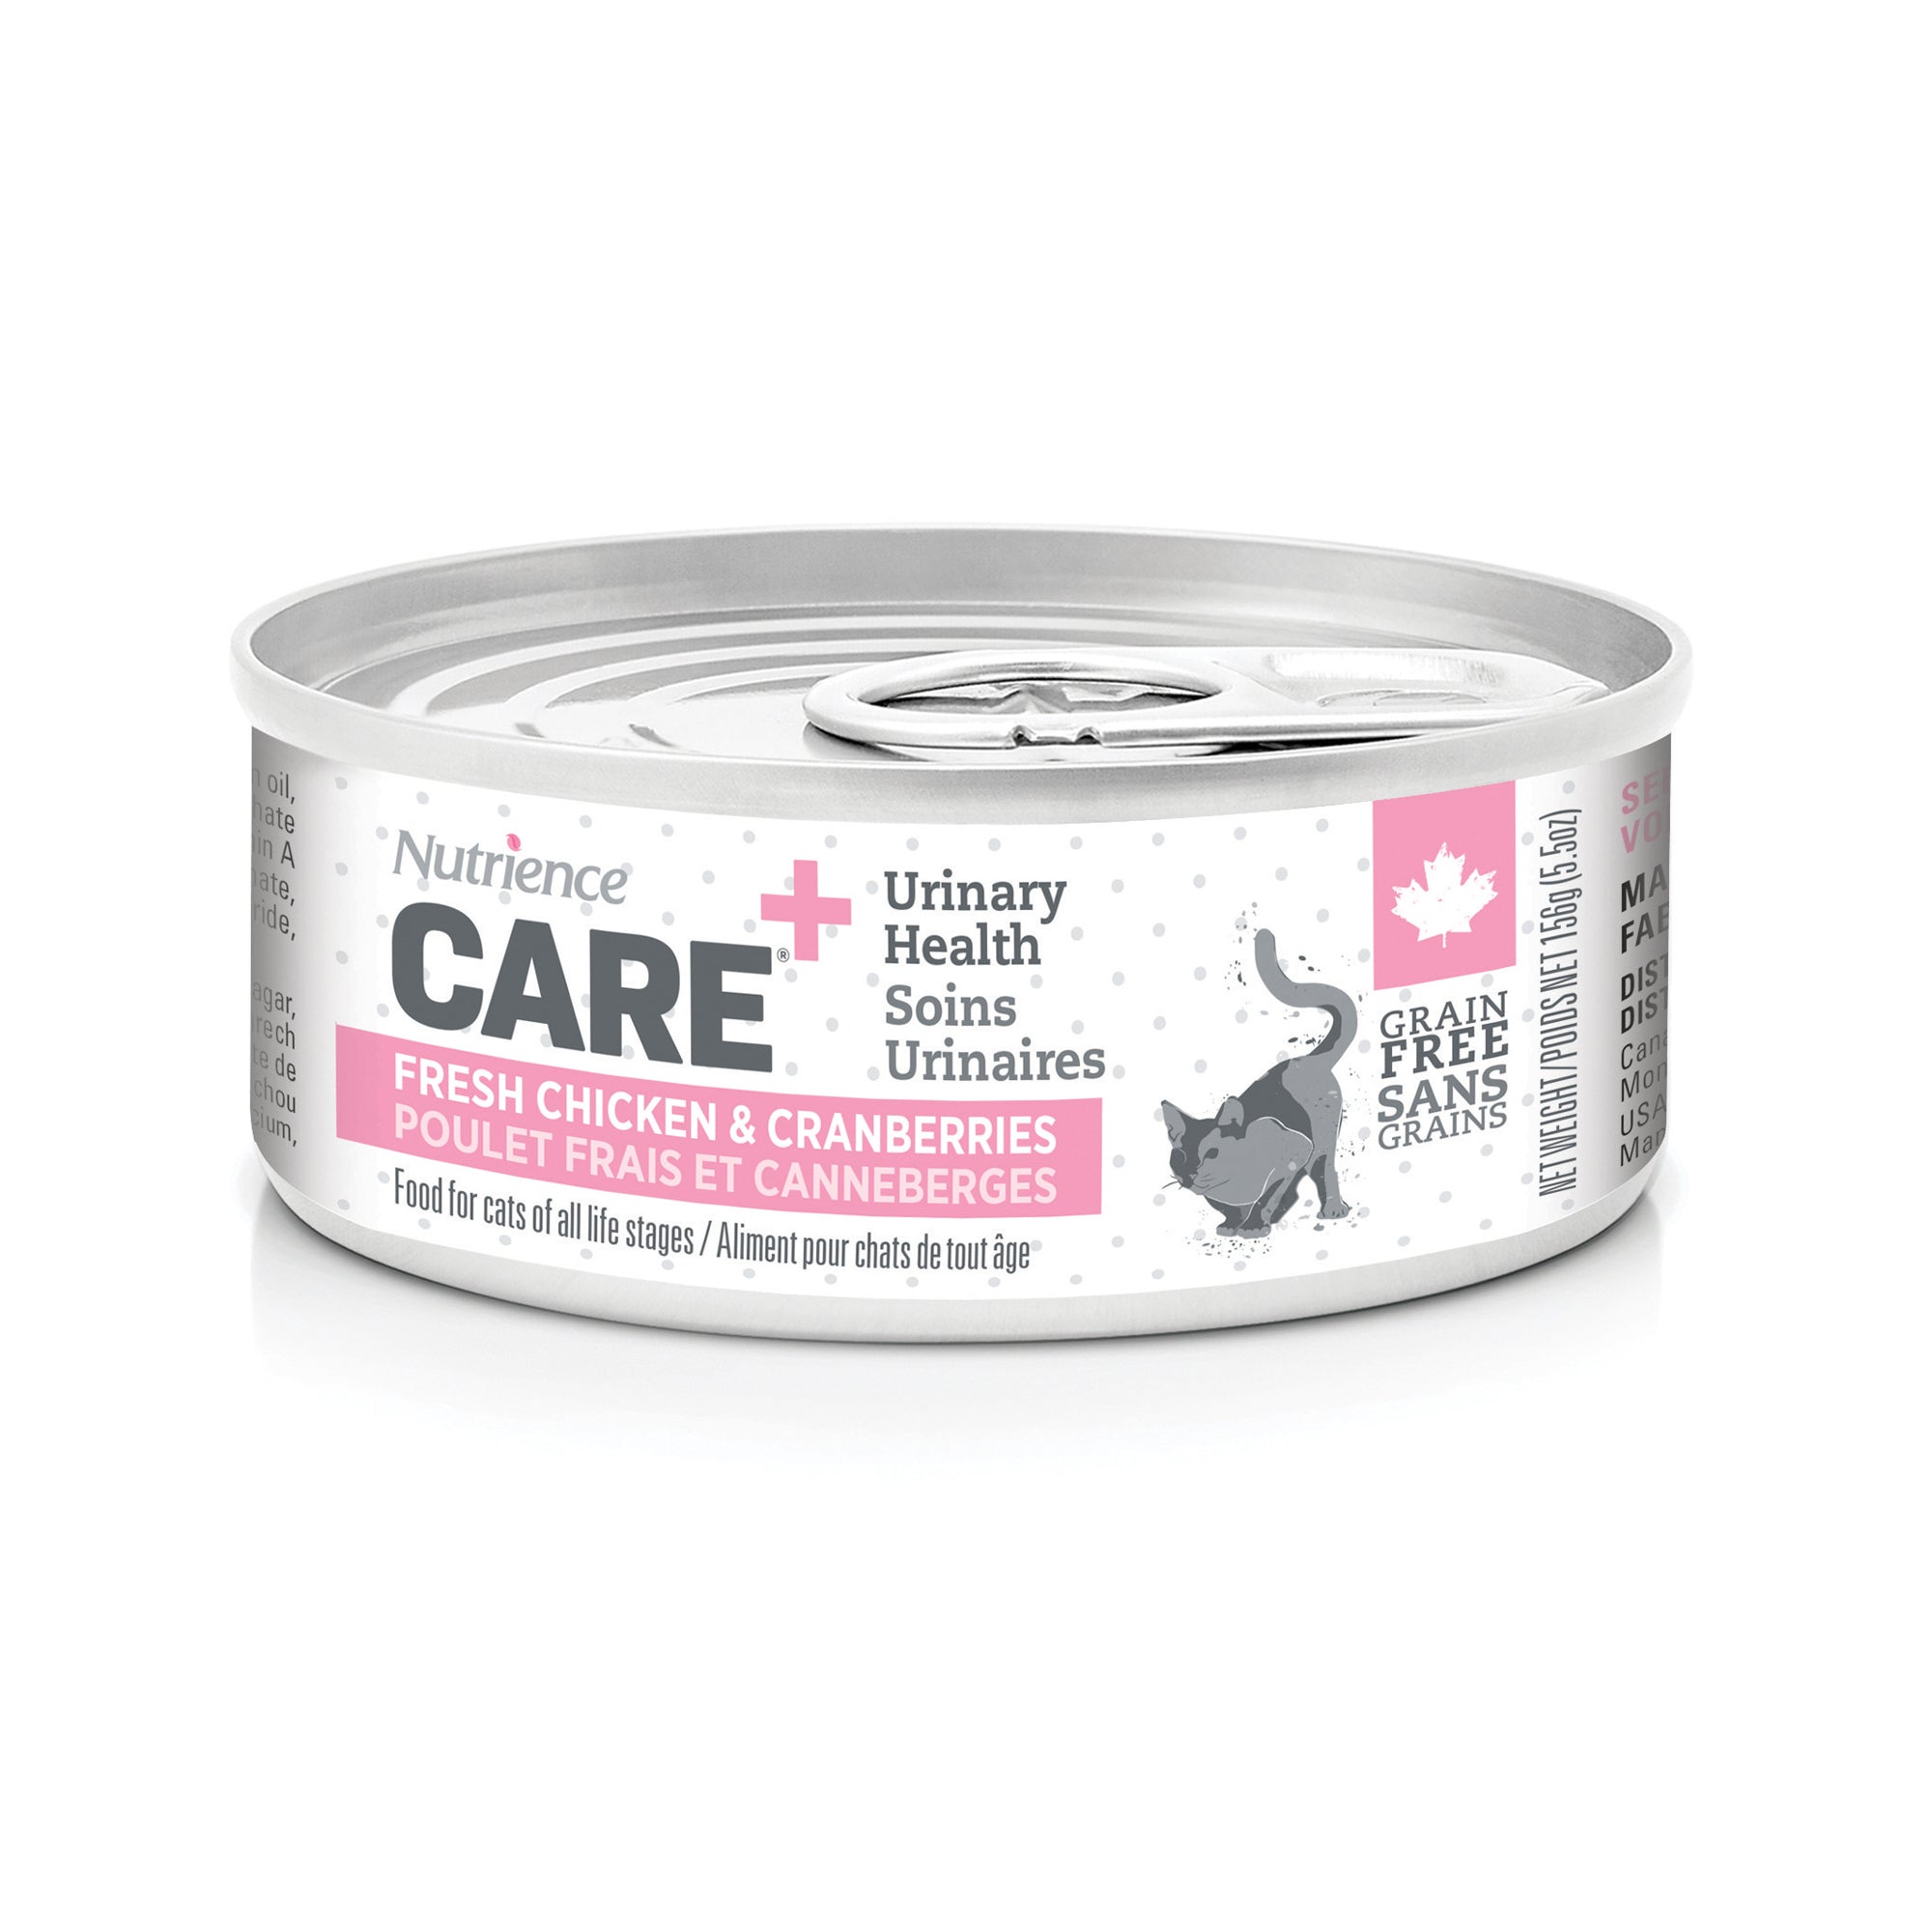 Nutrience Care Urinary Health Pâté for Cats - Fresh Chicken & Cranberries Recipe - 156 g (5.5 oz)